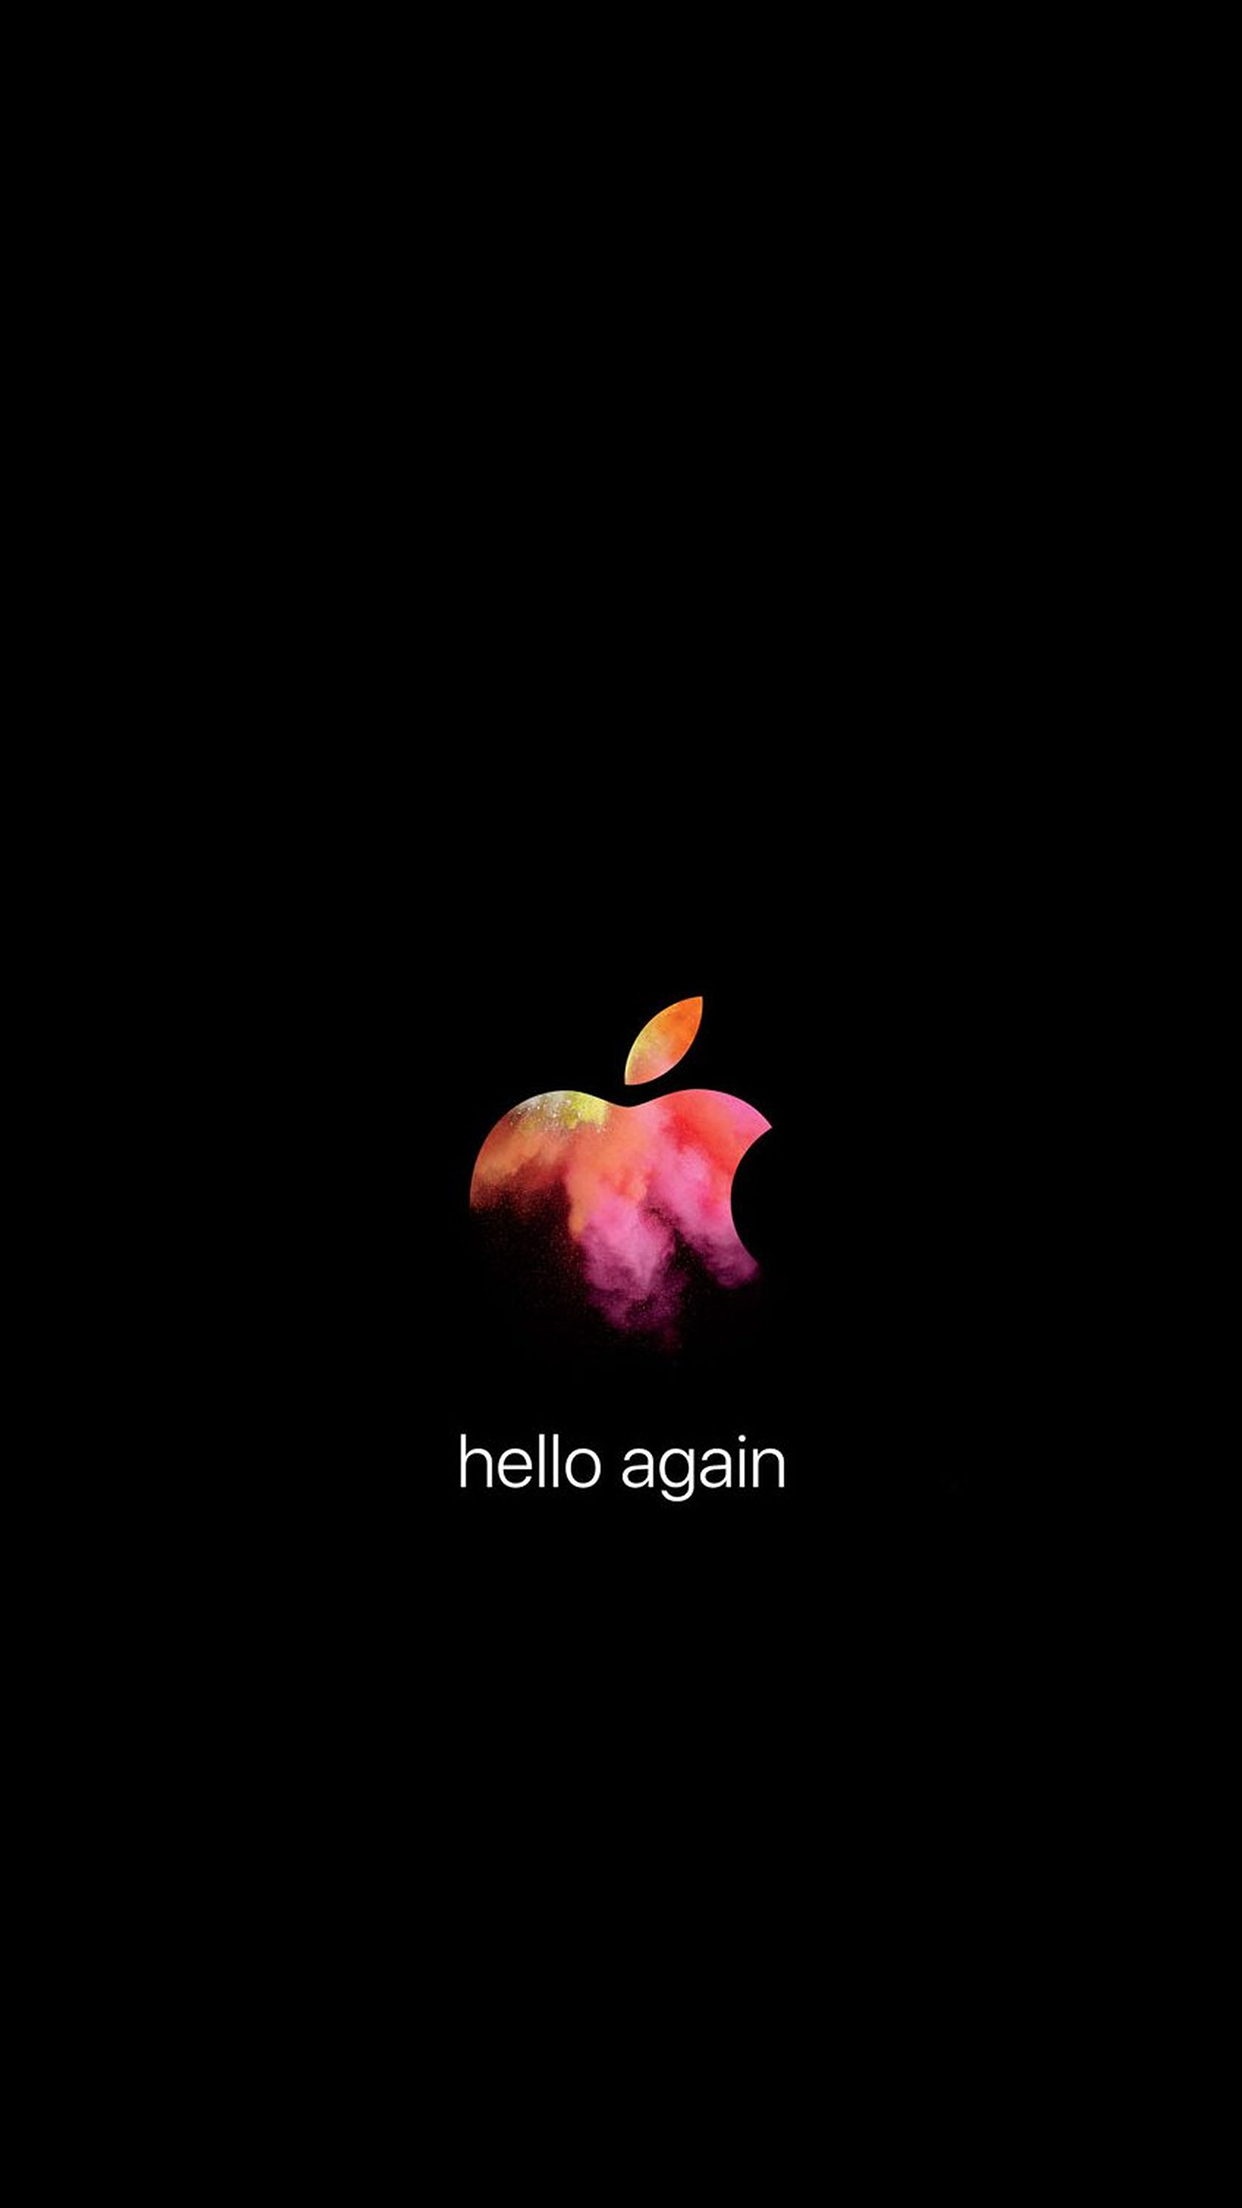 apple-october-27-event-wallpaper-hello-again-ar72014